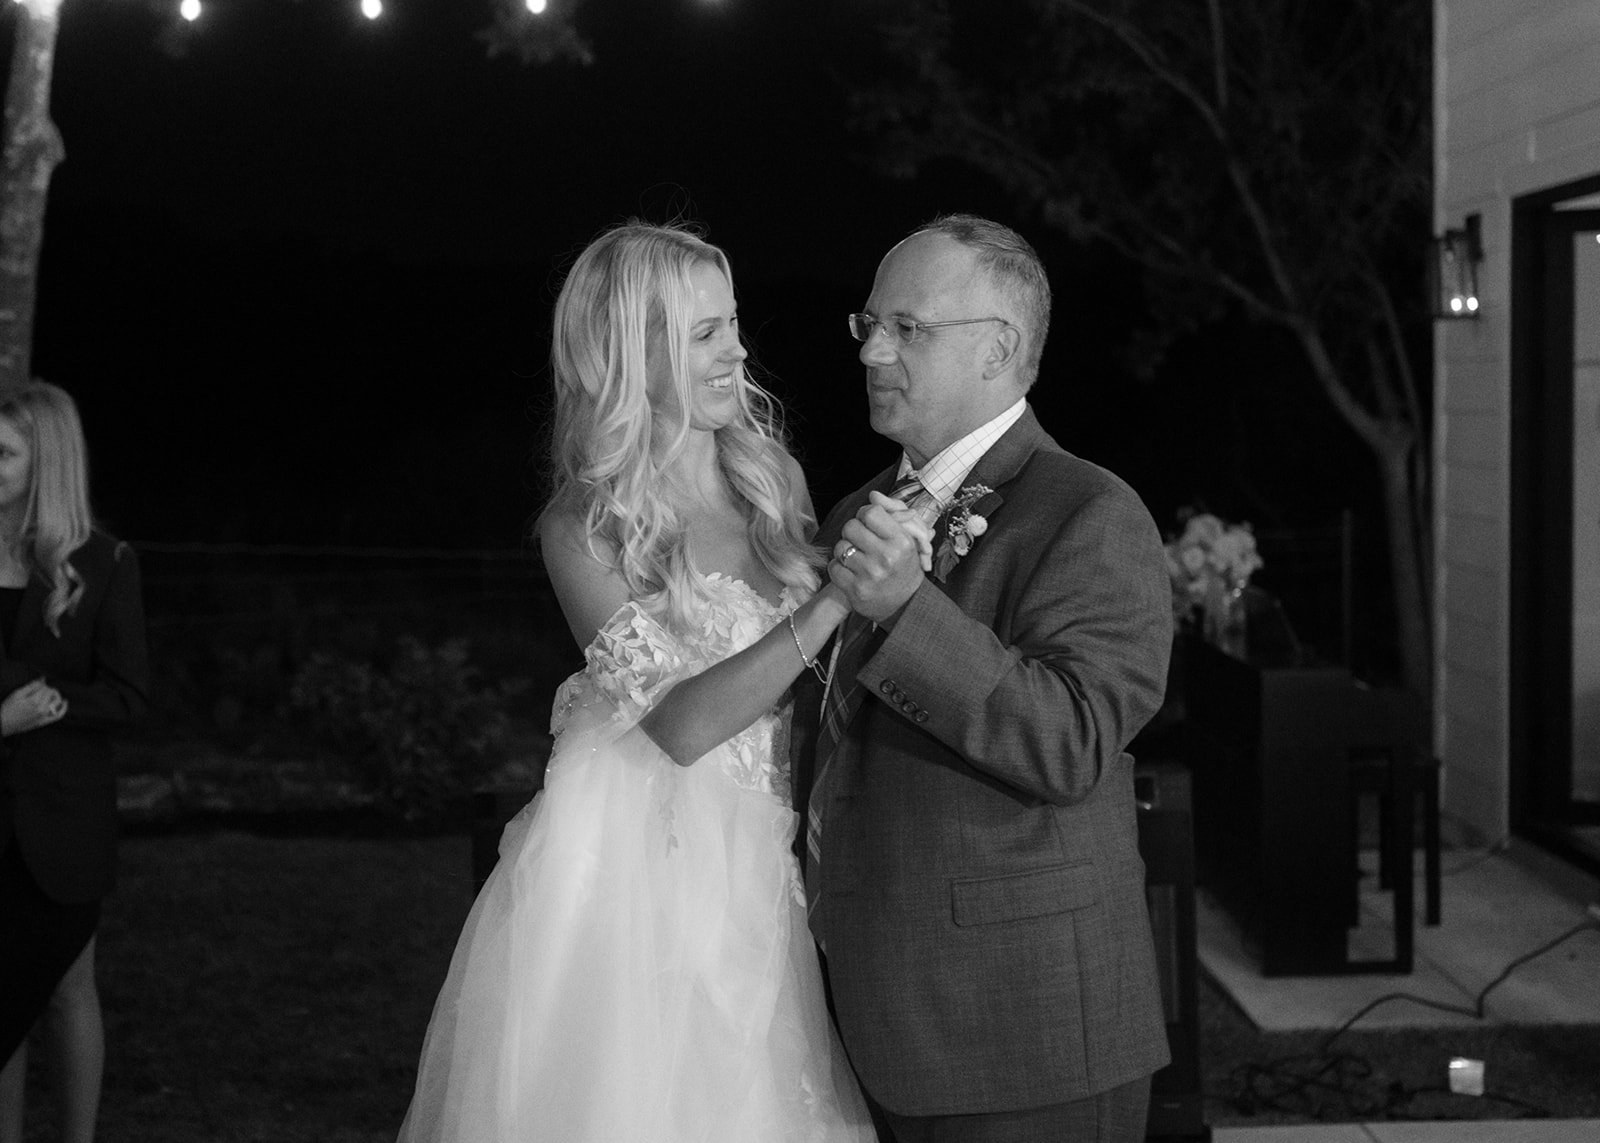 Best-Austin-Wedding-Photographers-Elopement-Film-35mm-Asheville-Santa-Barbara-Backyard-188.jpg